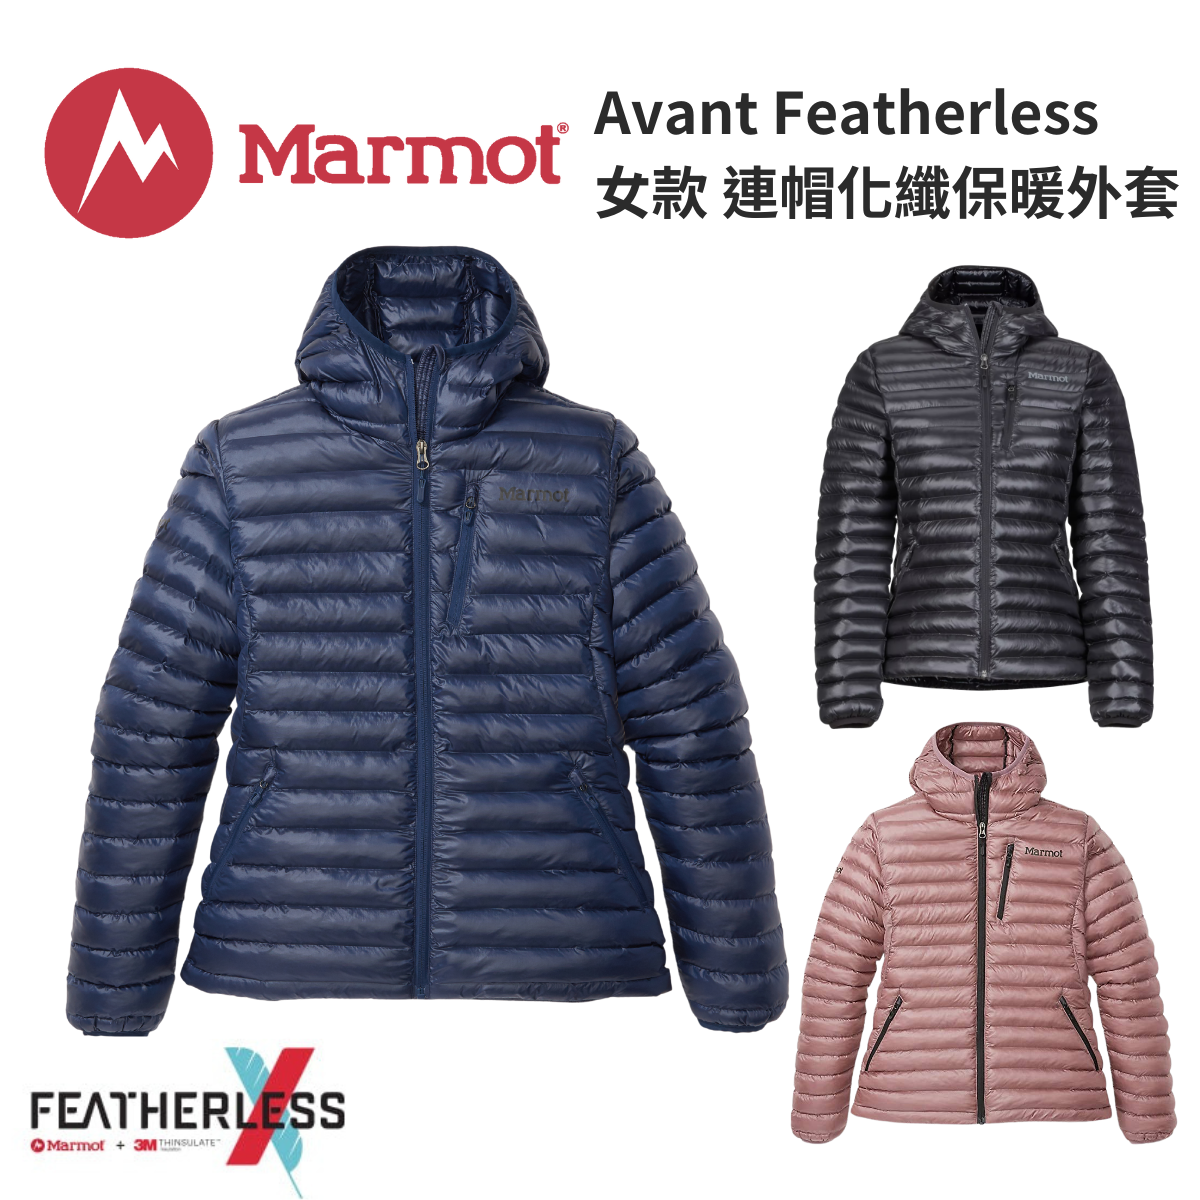 【Marmot】Avant Featherless 女款 連帽化纖保暖外套